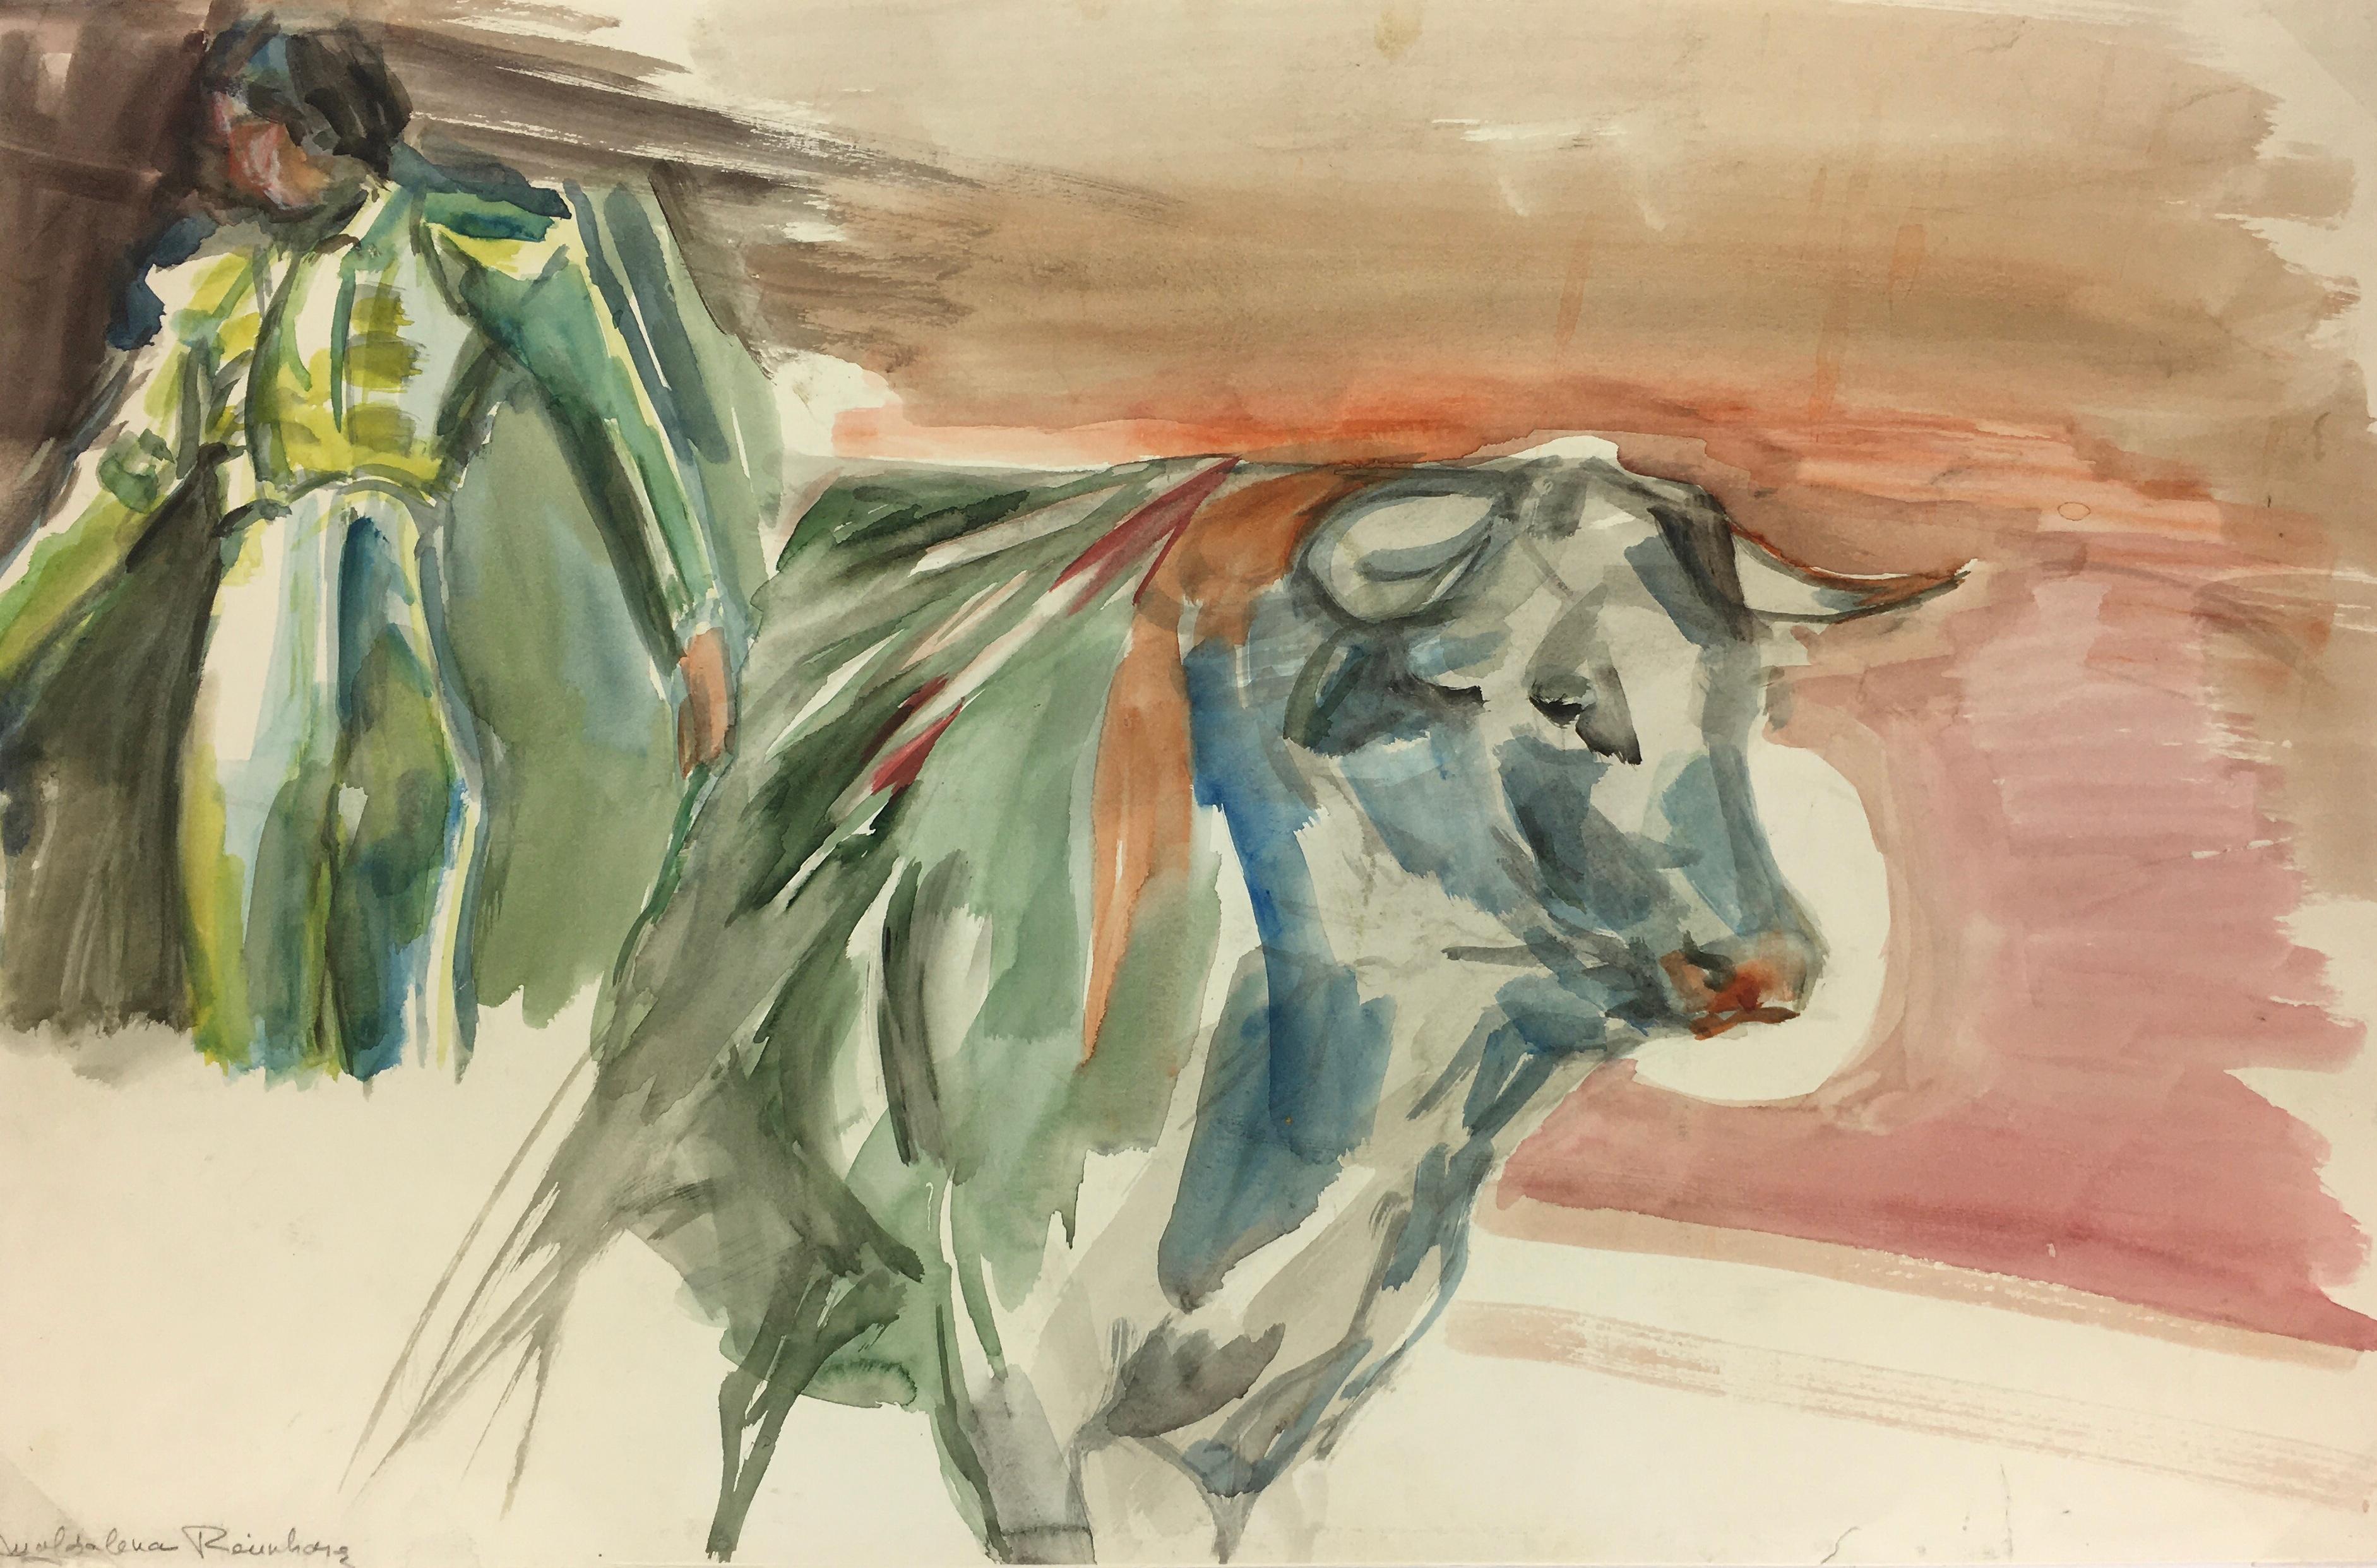 Magdalena Reinharez Figurative Art - Watercolor Bullfight Painting - The Matador